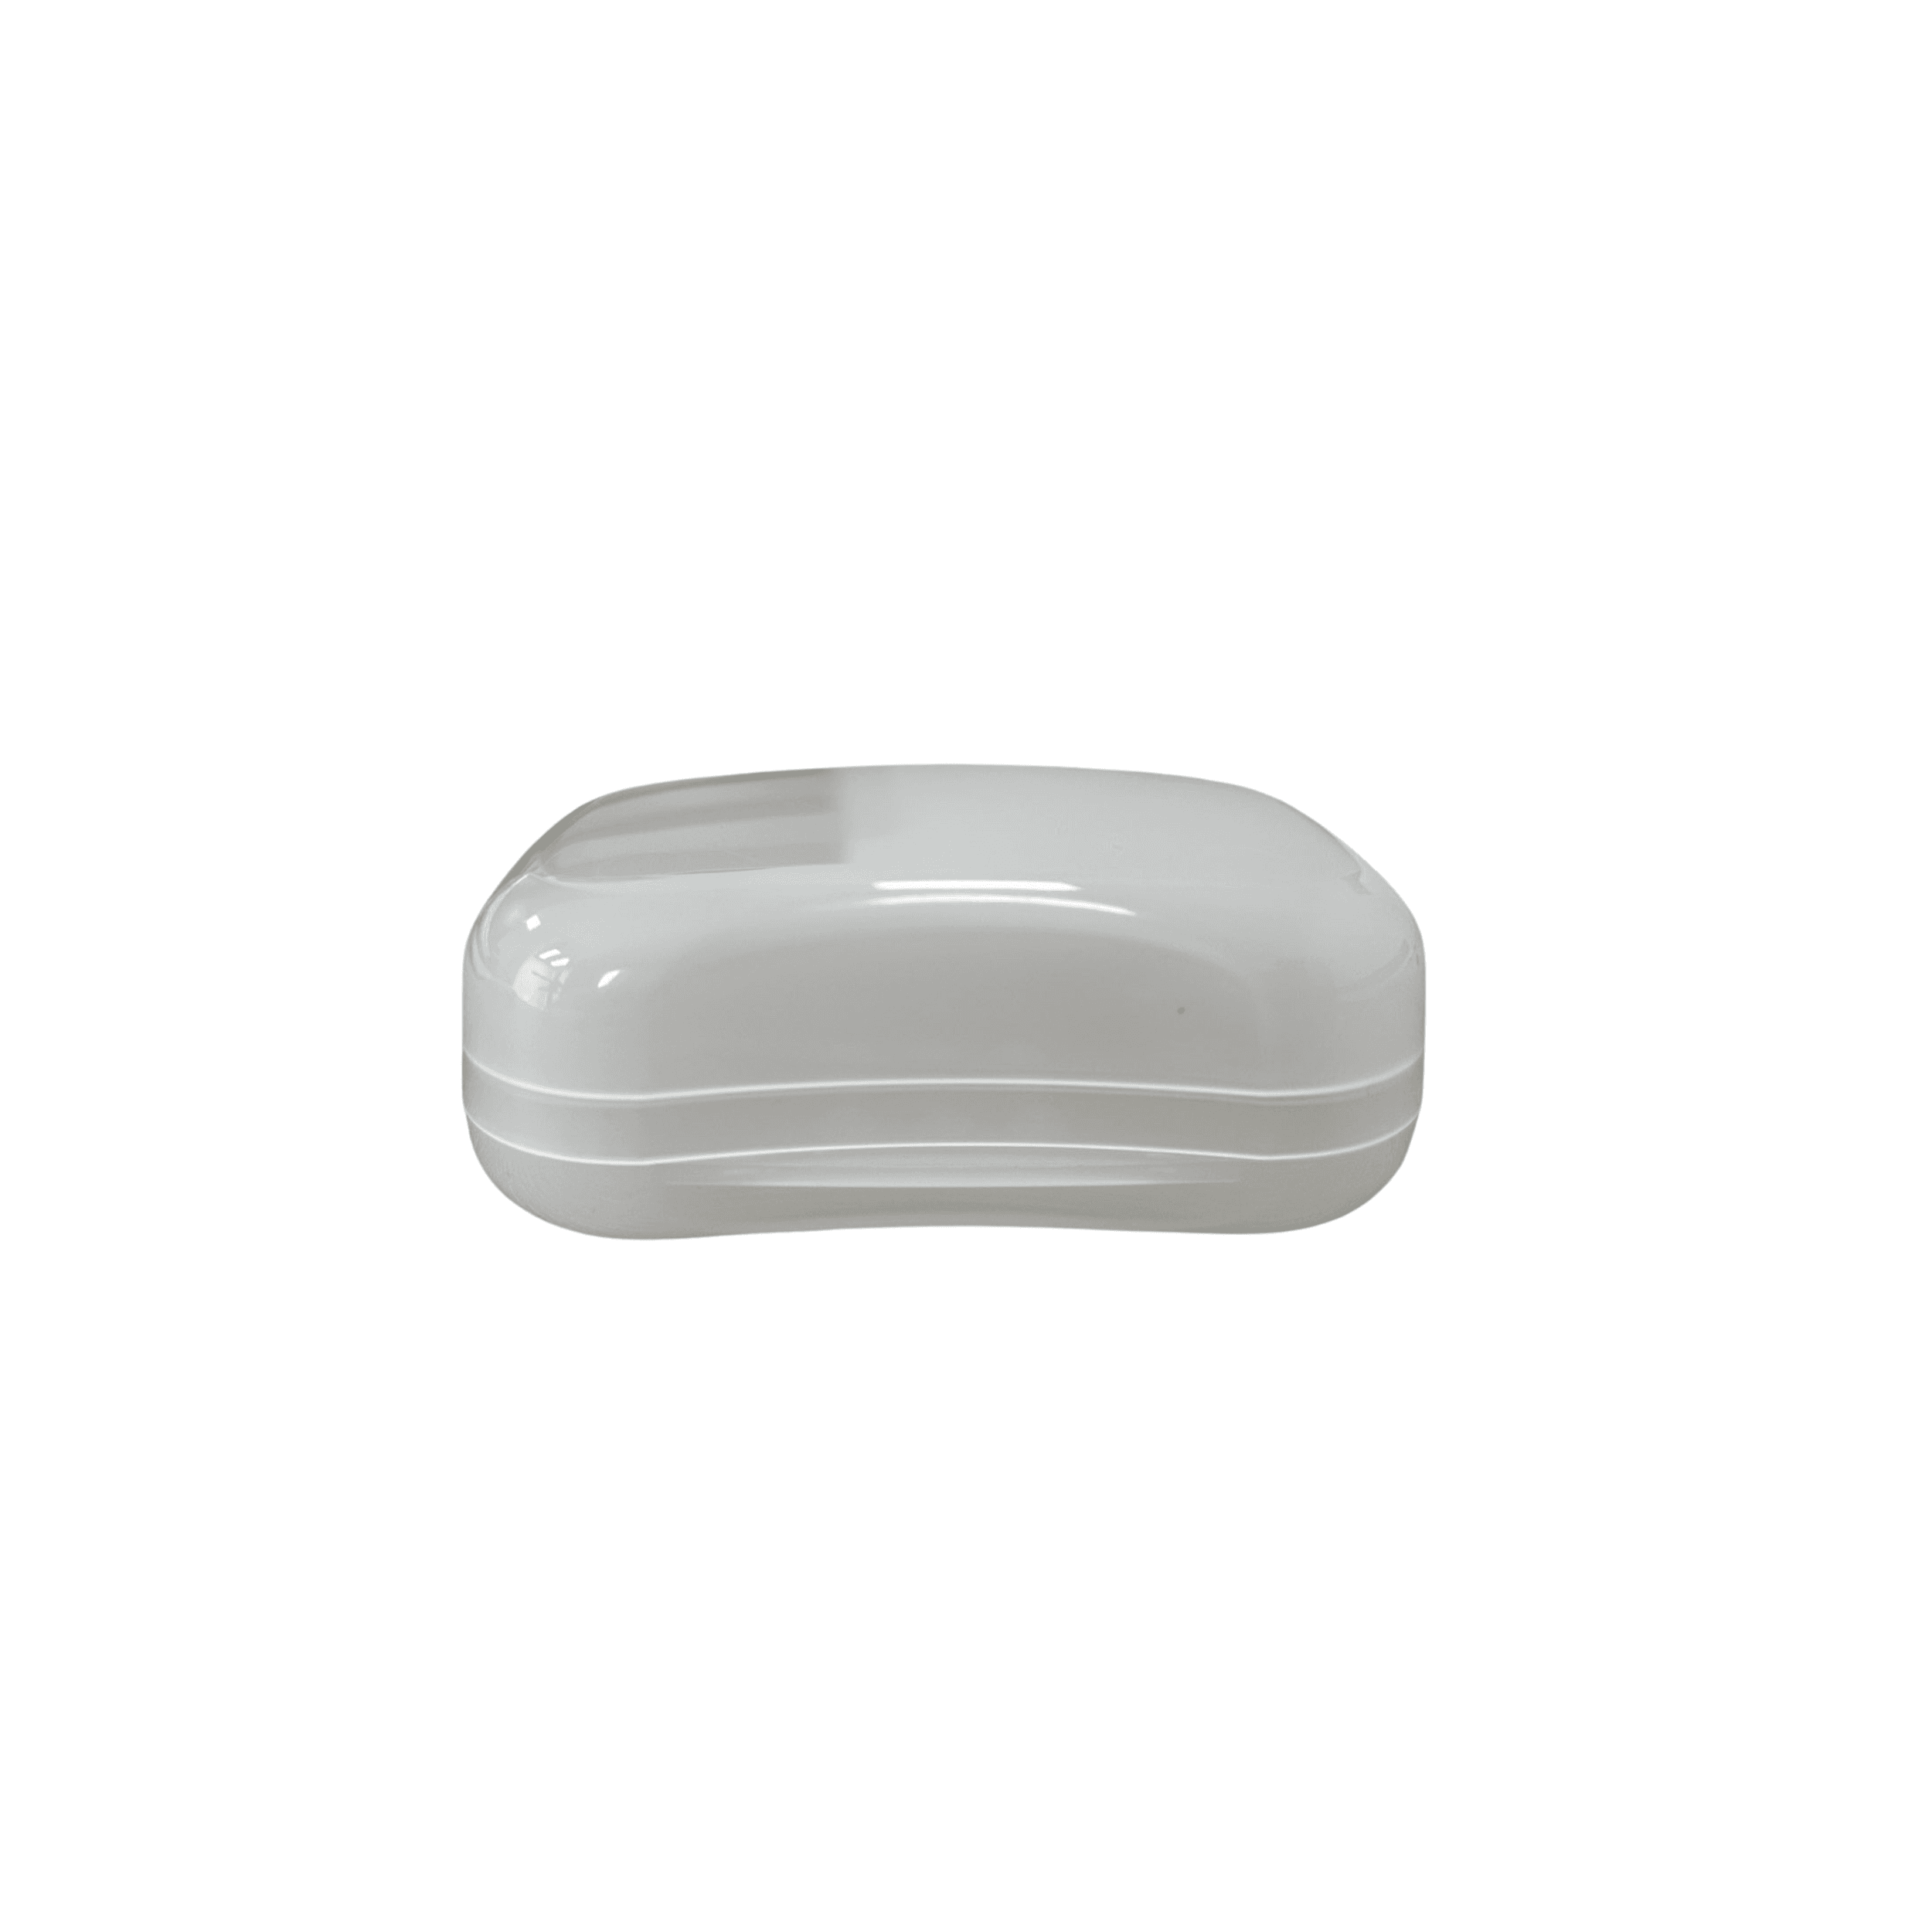 Tourist soap dish, closed plastic soap dish, type III - transparent